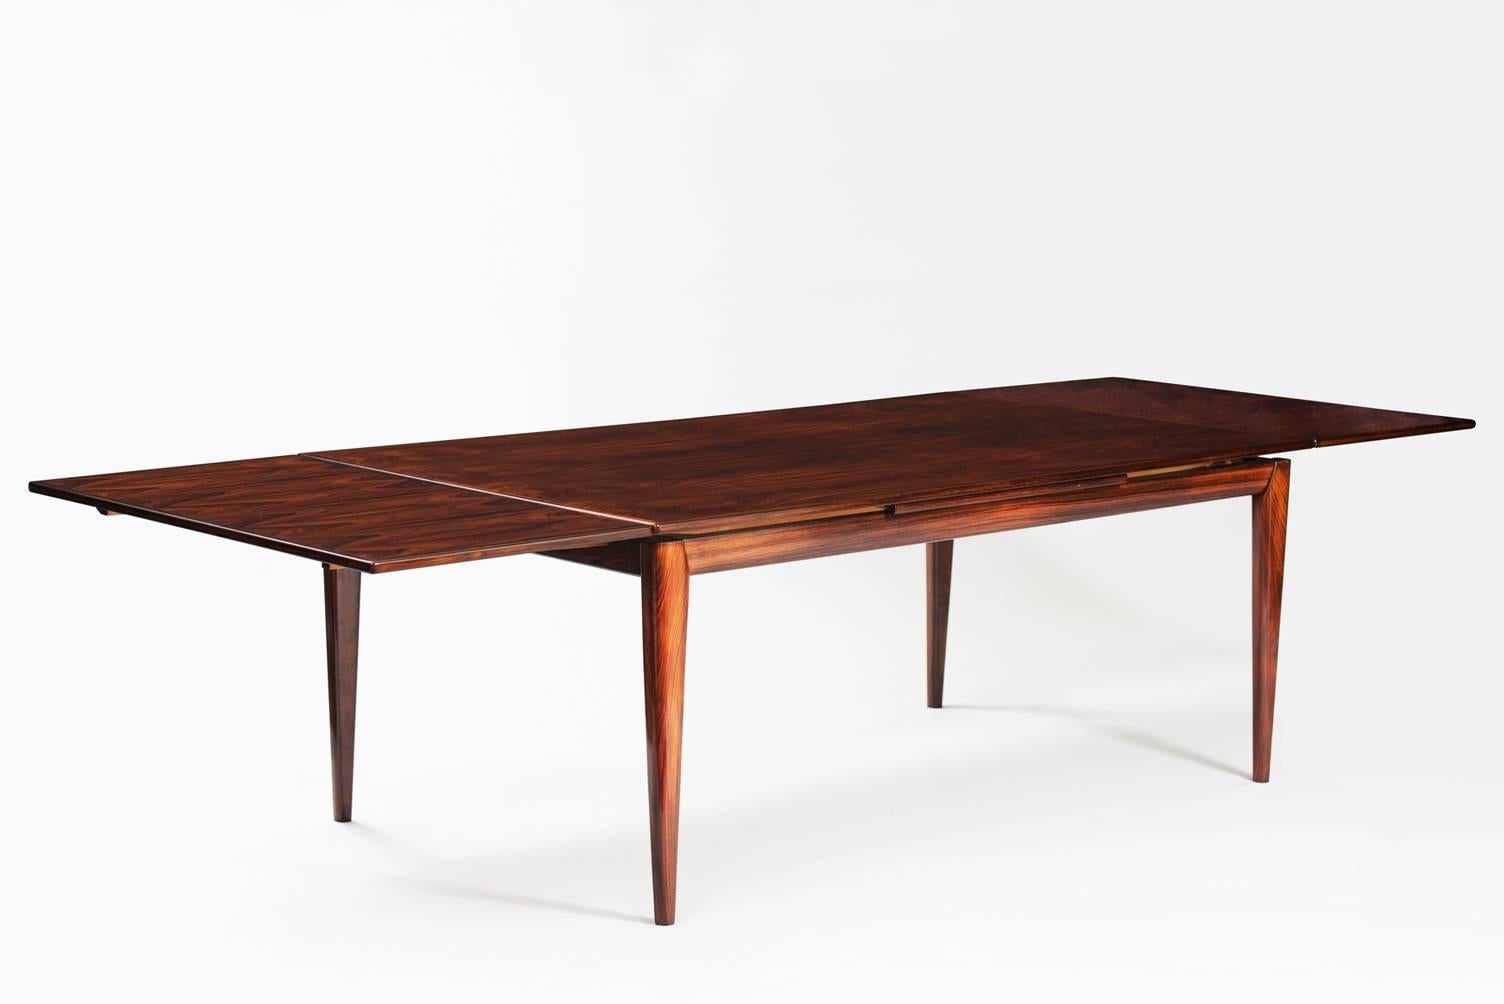 Rosewood large extendable dining table.
Measures: W 180 296 cm (open).
Producer: J.L. Møller.